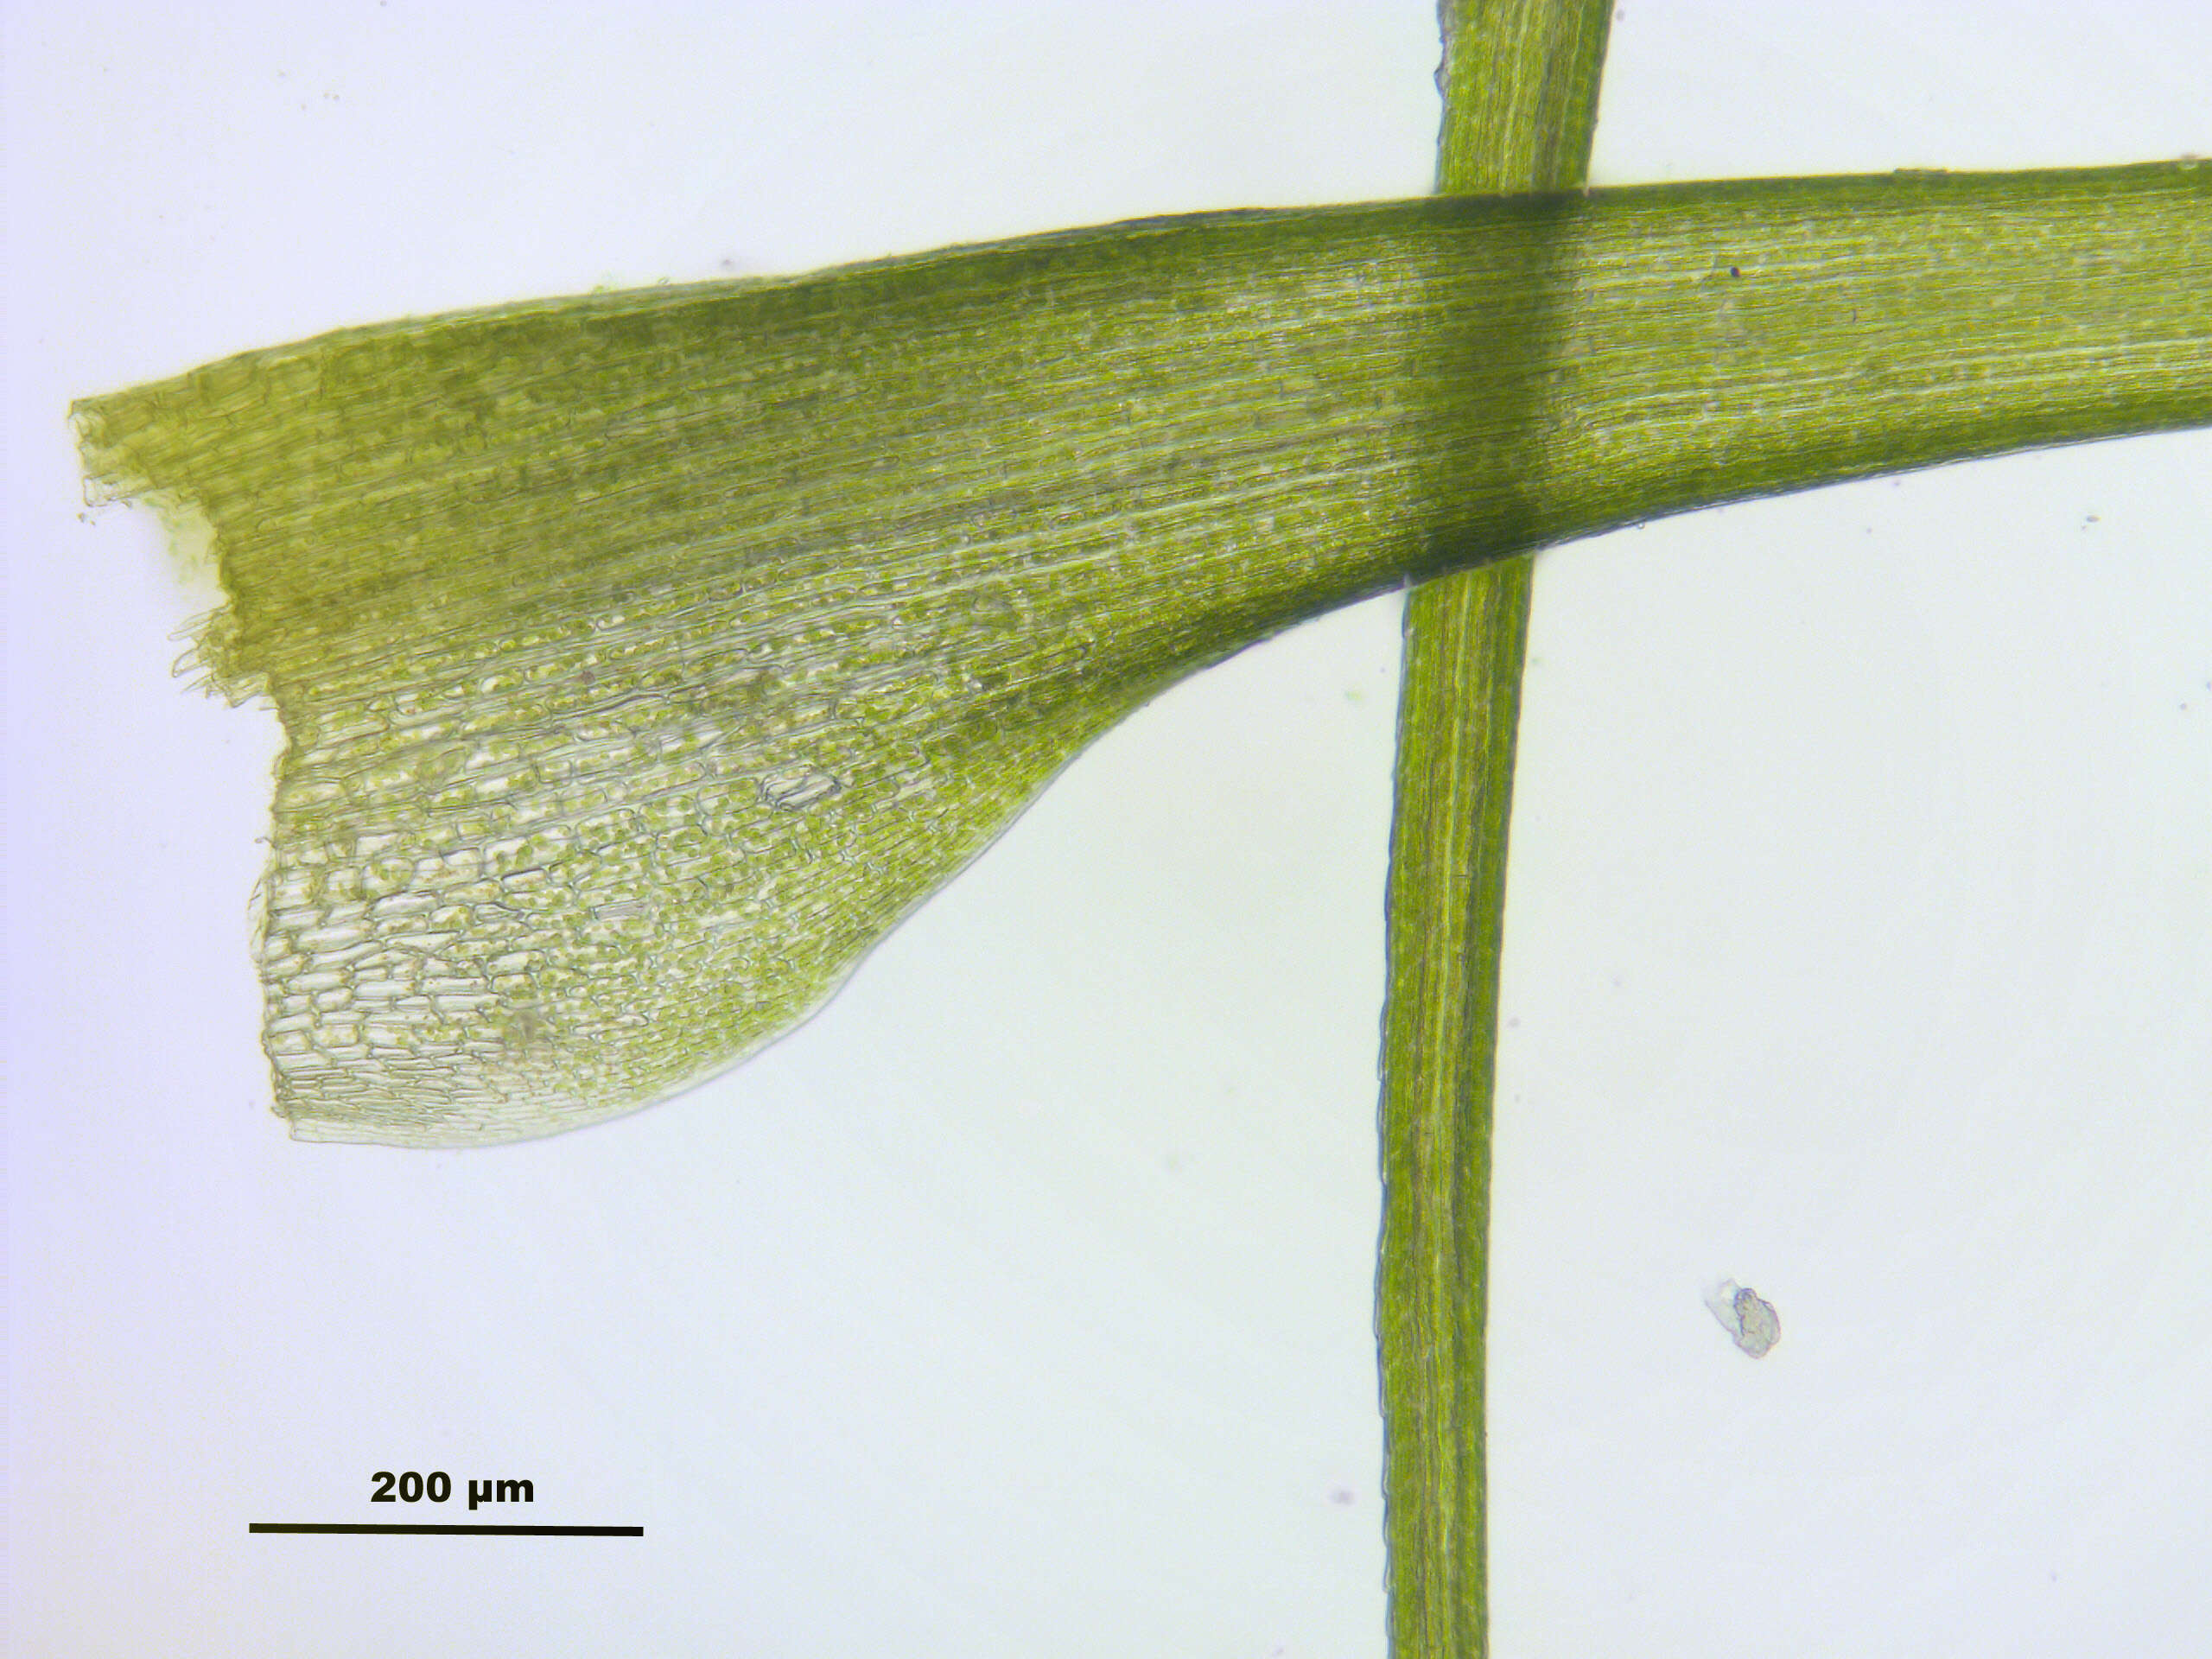 Image of denuded dicranodontium moss